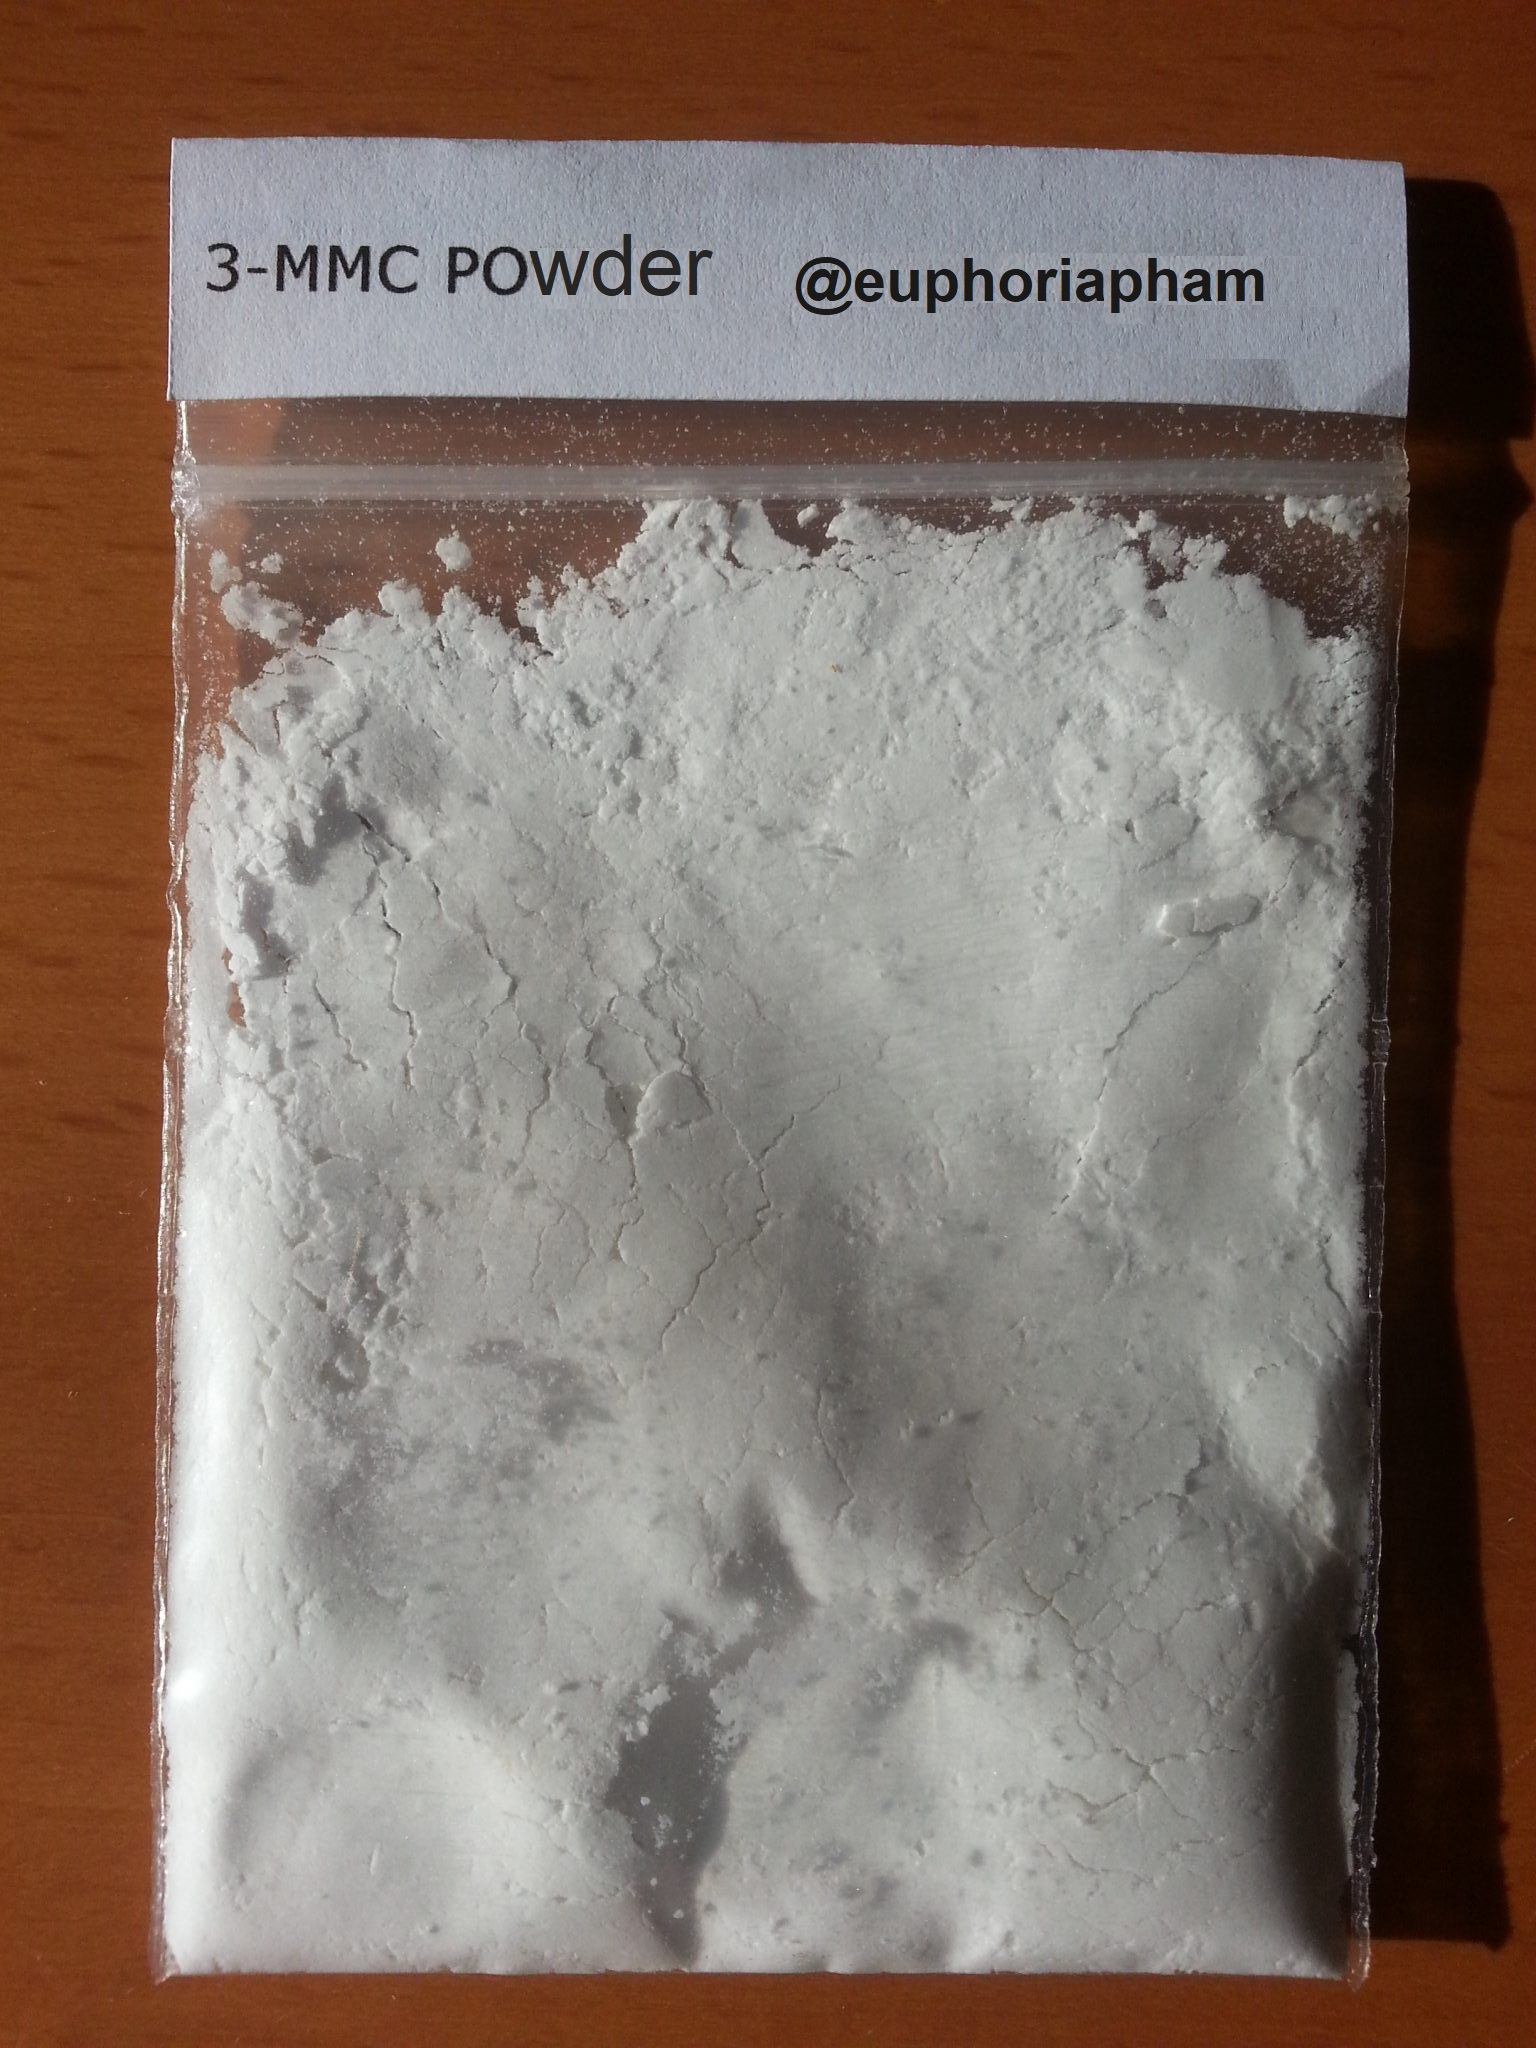 Koupit MDMA, XTC, 3-MMC, MDPV, Pervitin, Efedrin